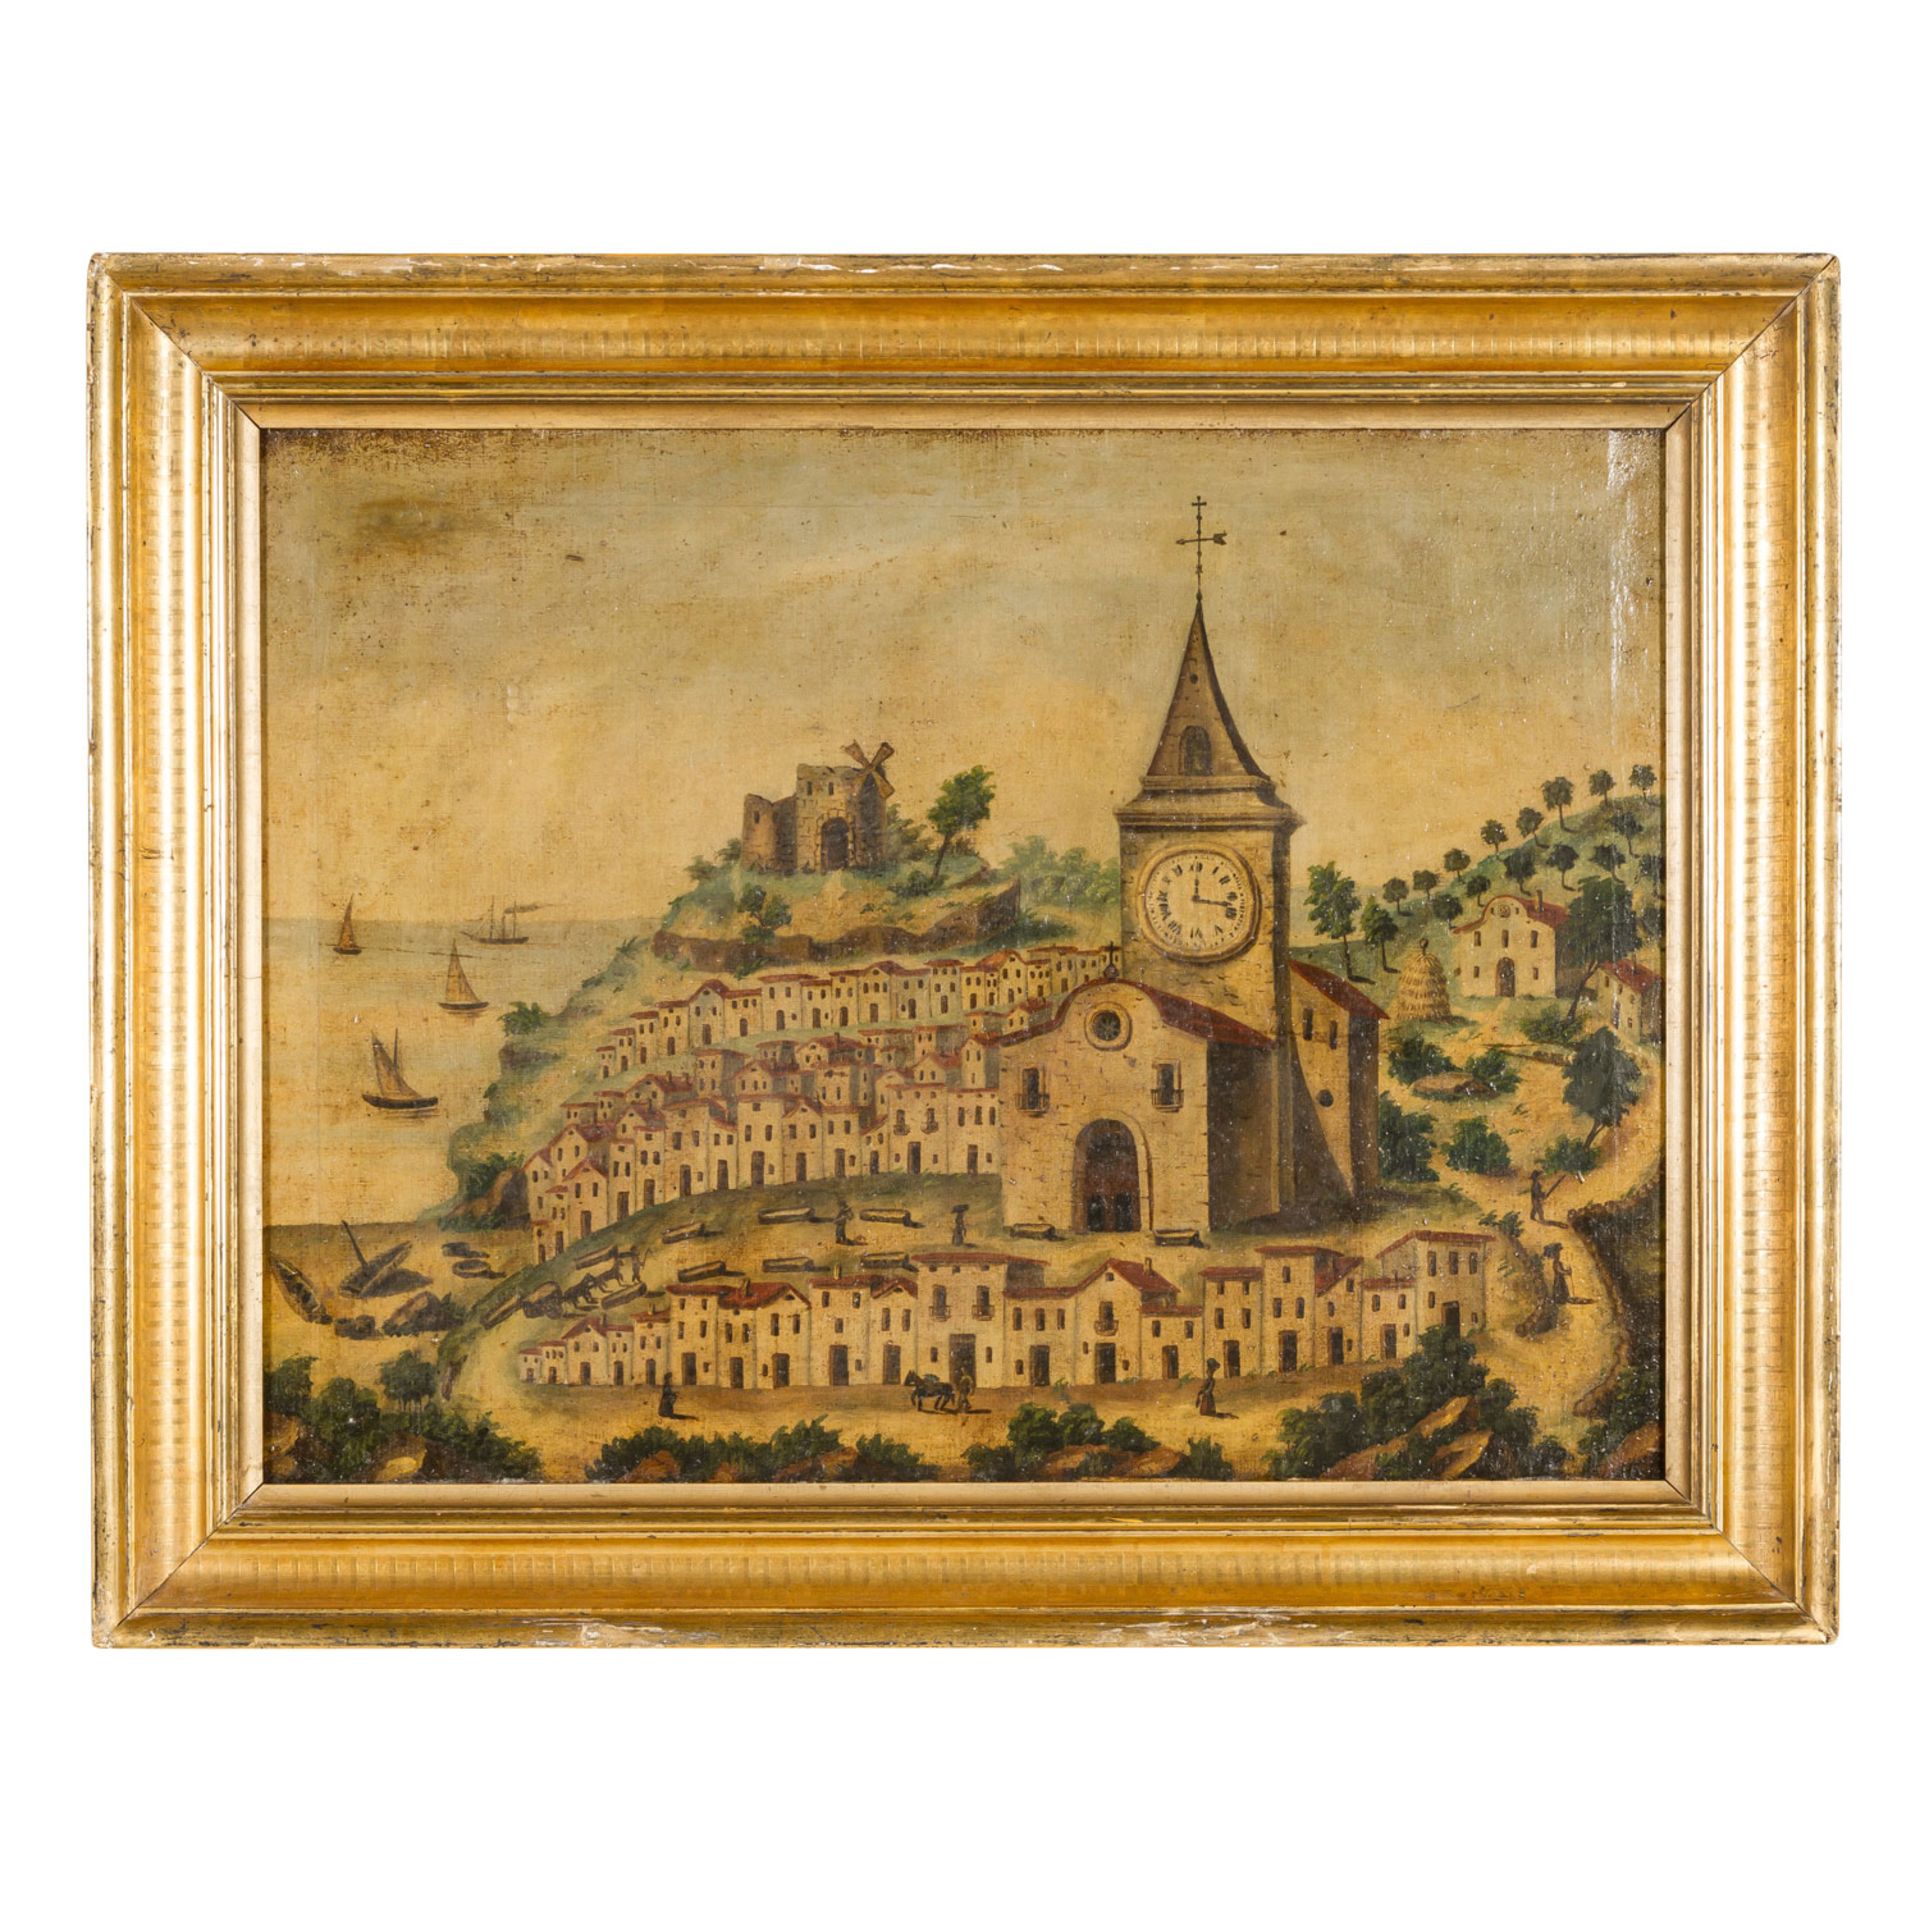 SPANISCHE KOLONIAL-SCHULE, "Landschaft mit Stadtvedute", 18./19. Jahrhundert, - Bild 2 aus 4